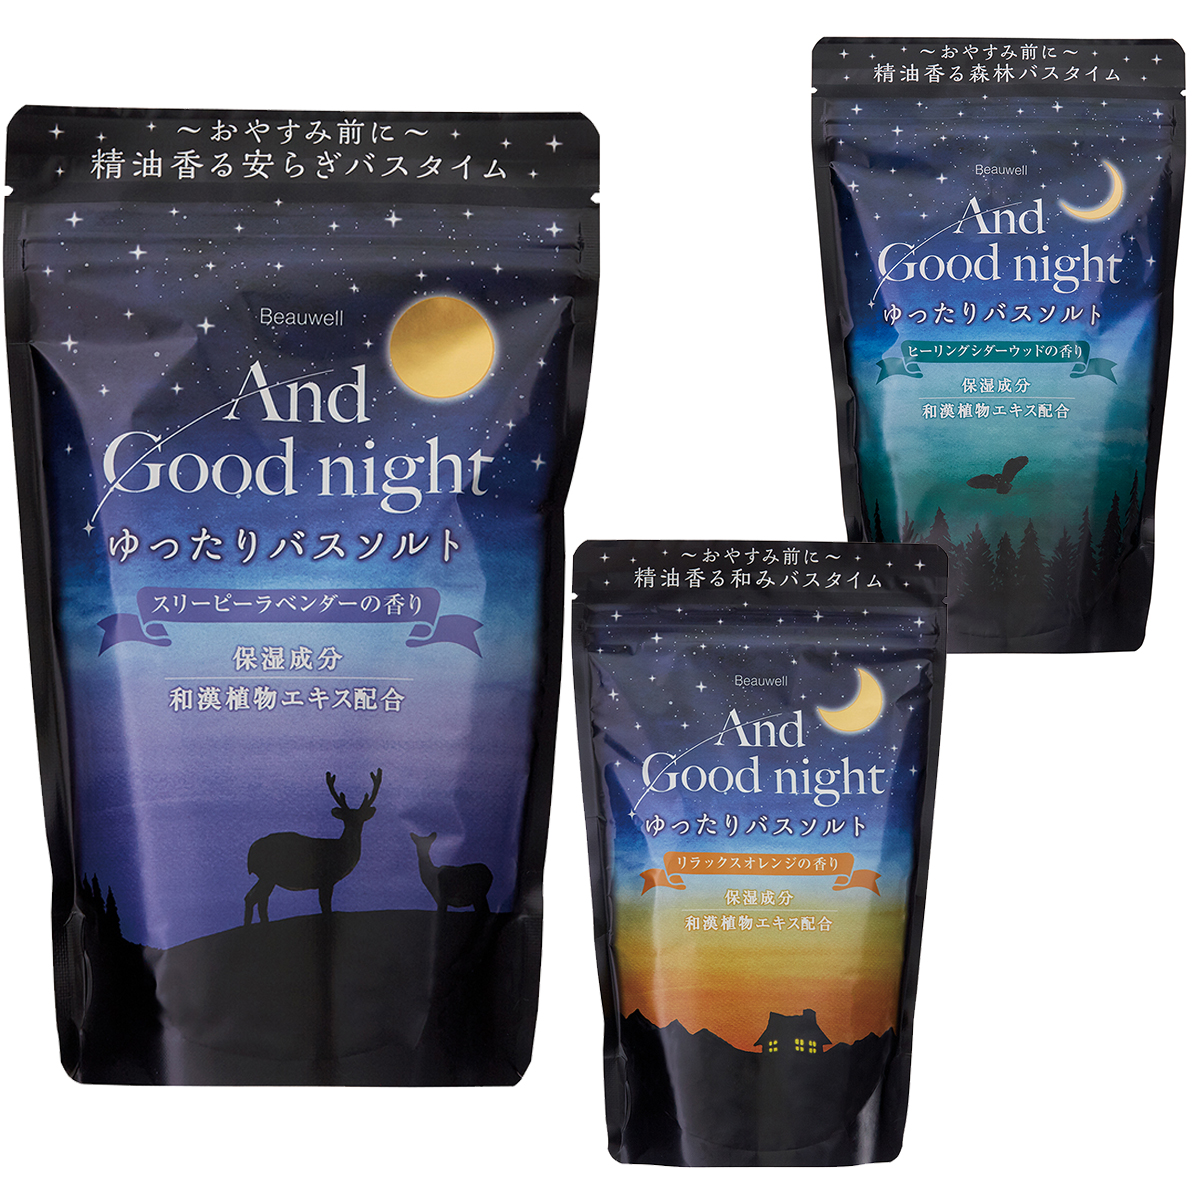 【And Good night】アンドグッドナイト ゆったりバスソルトL 精油100%の天然アロマ入浴料【日本製】